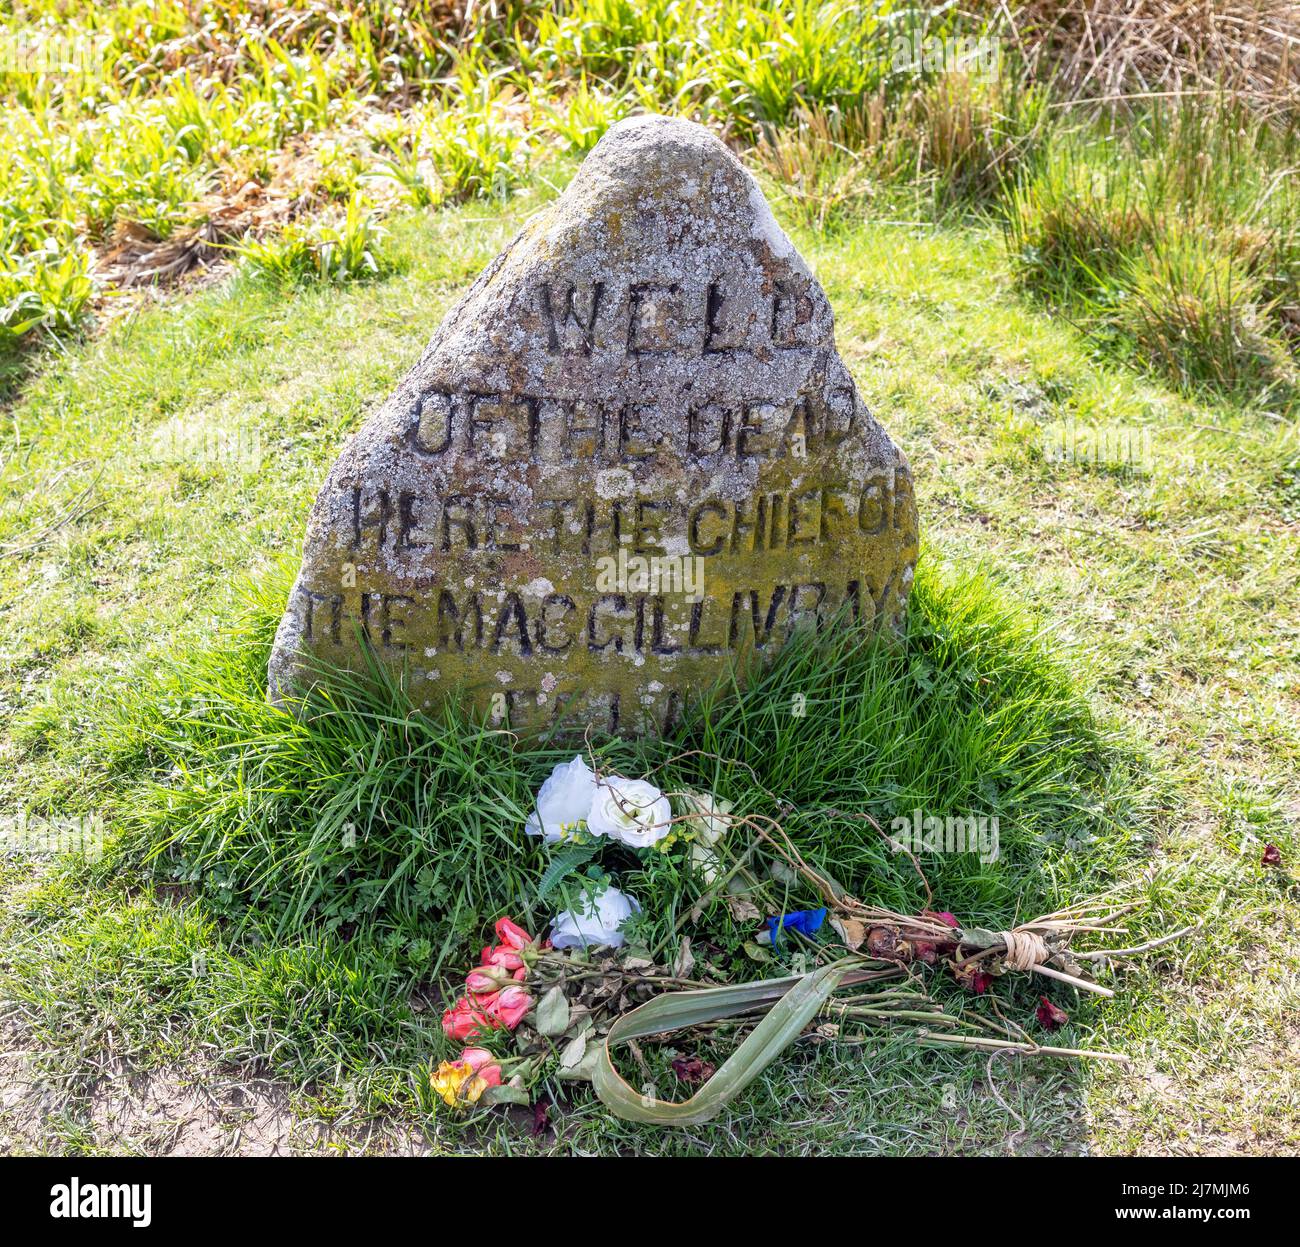 Macingtosh Burial Marker Battlefield of Culloden Moor Scotland Stock Photo